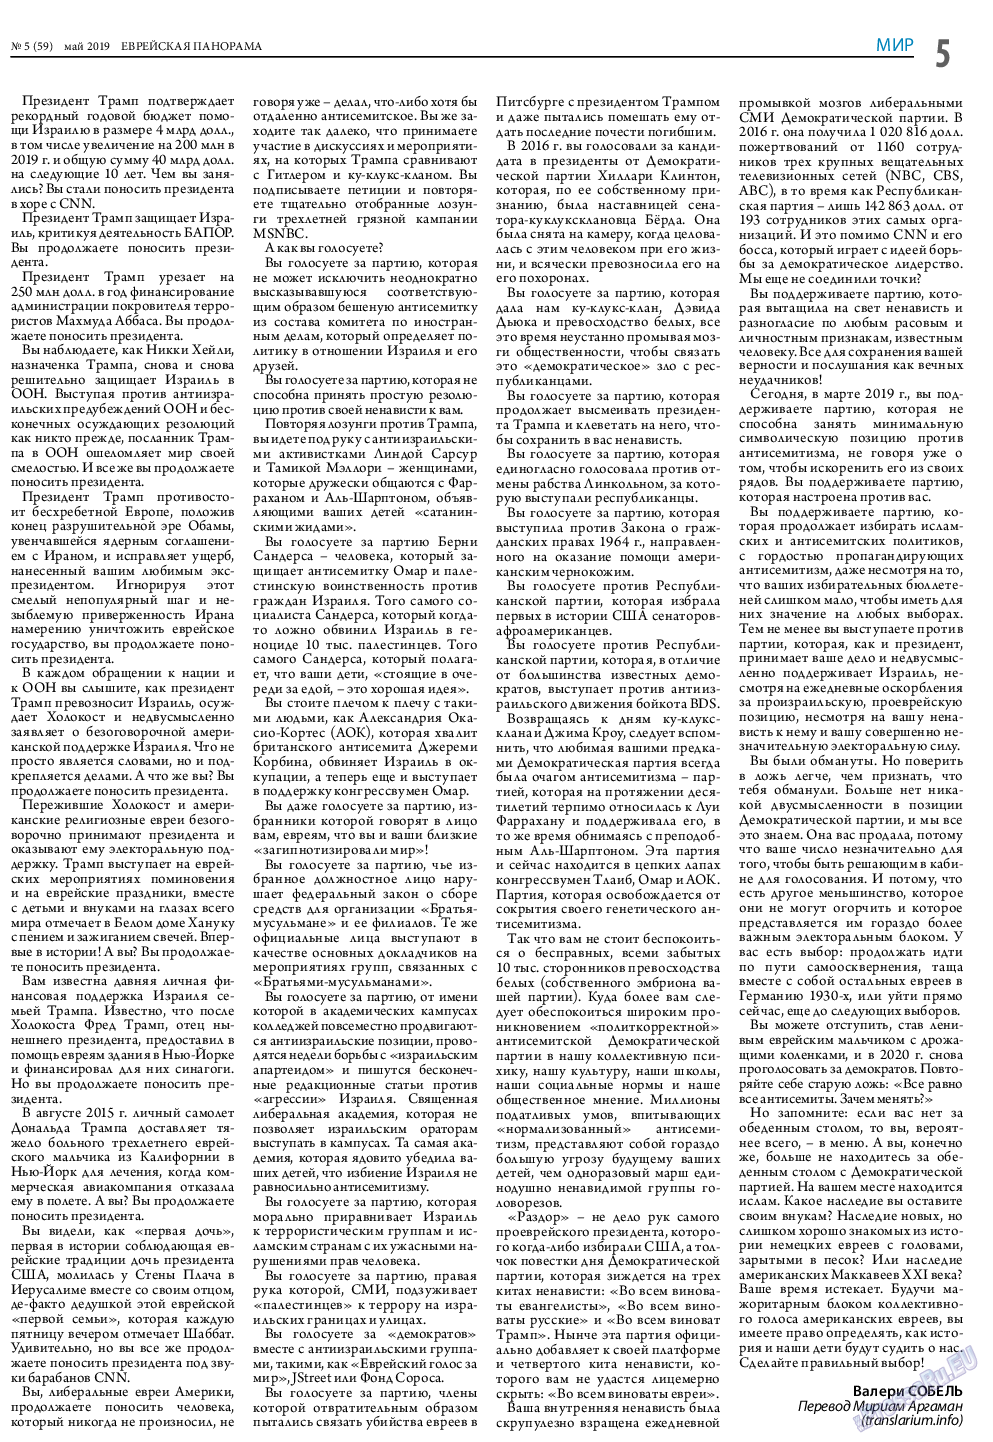 Еврейская панорама, газета. 2019 №5 стр.5